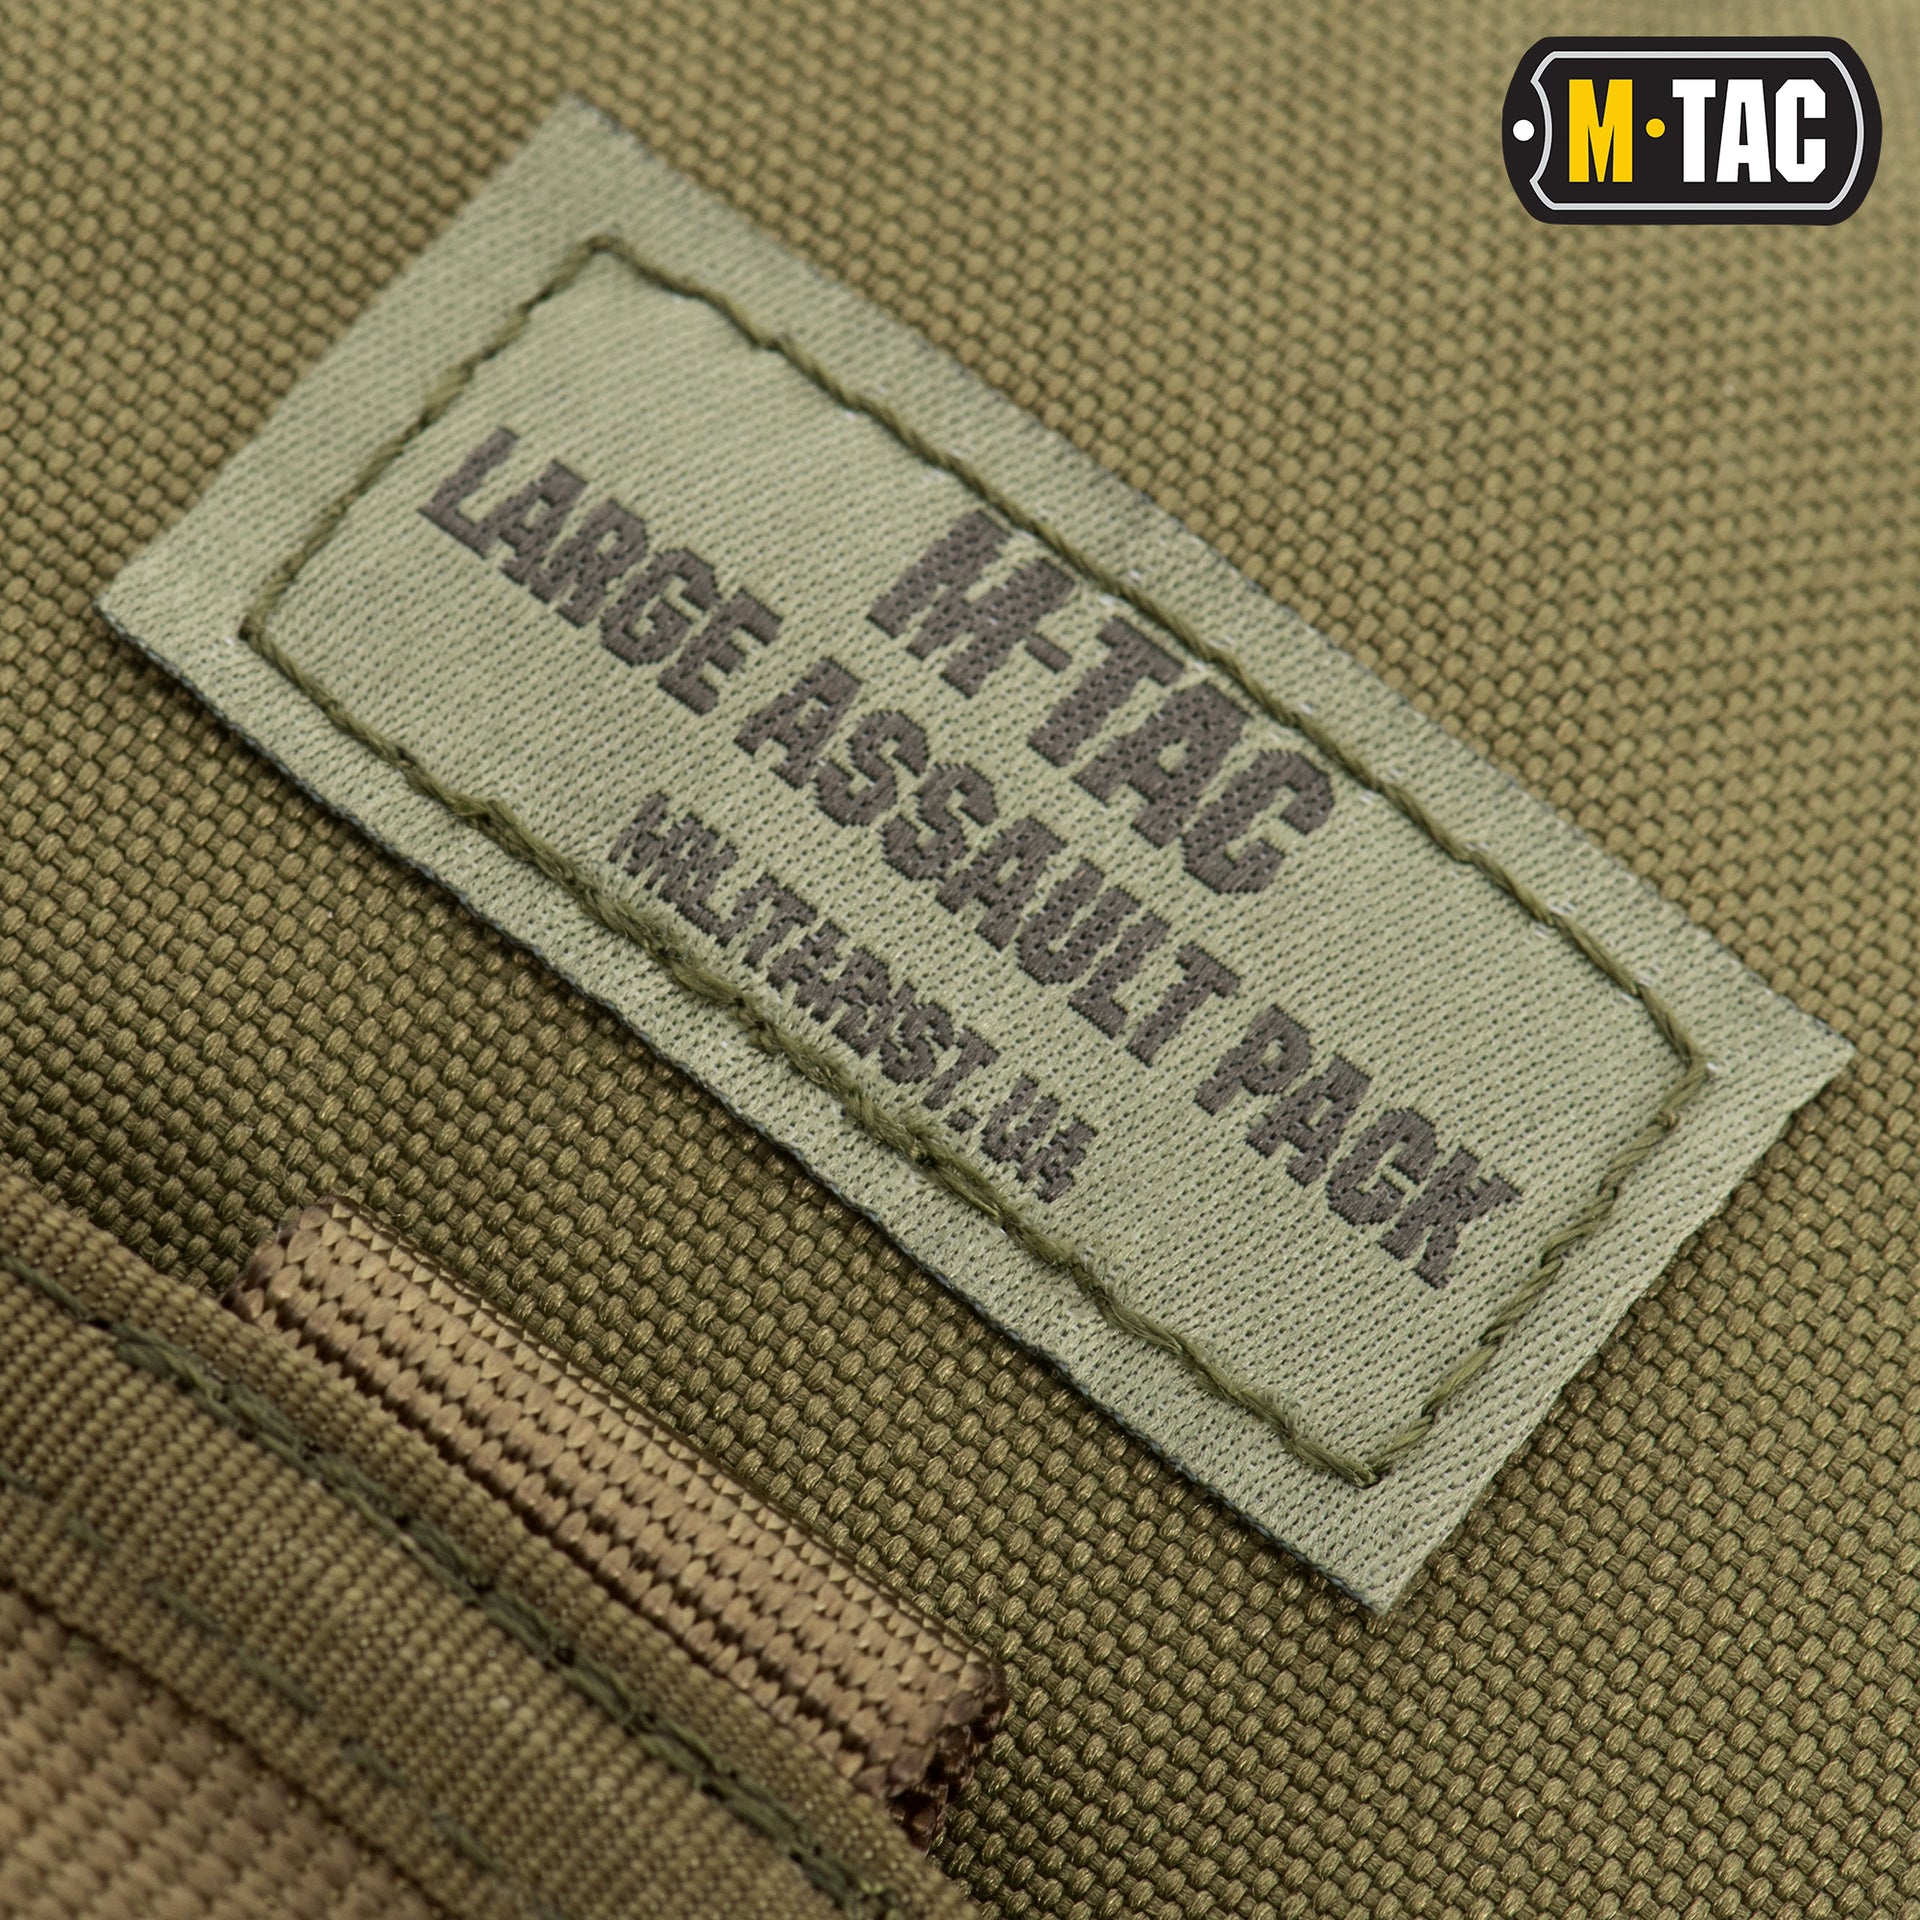 M-Tac Large Assault Pack